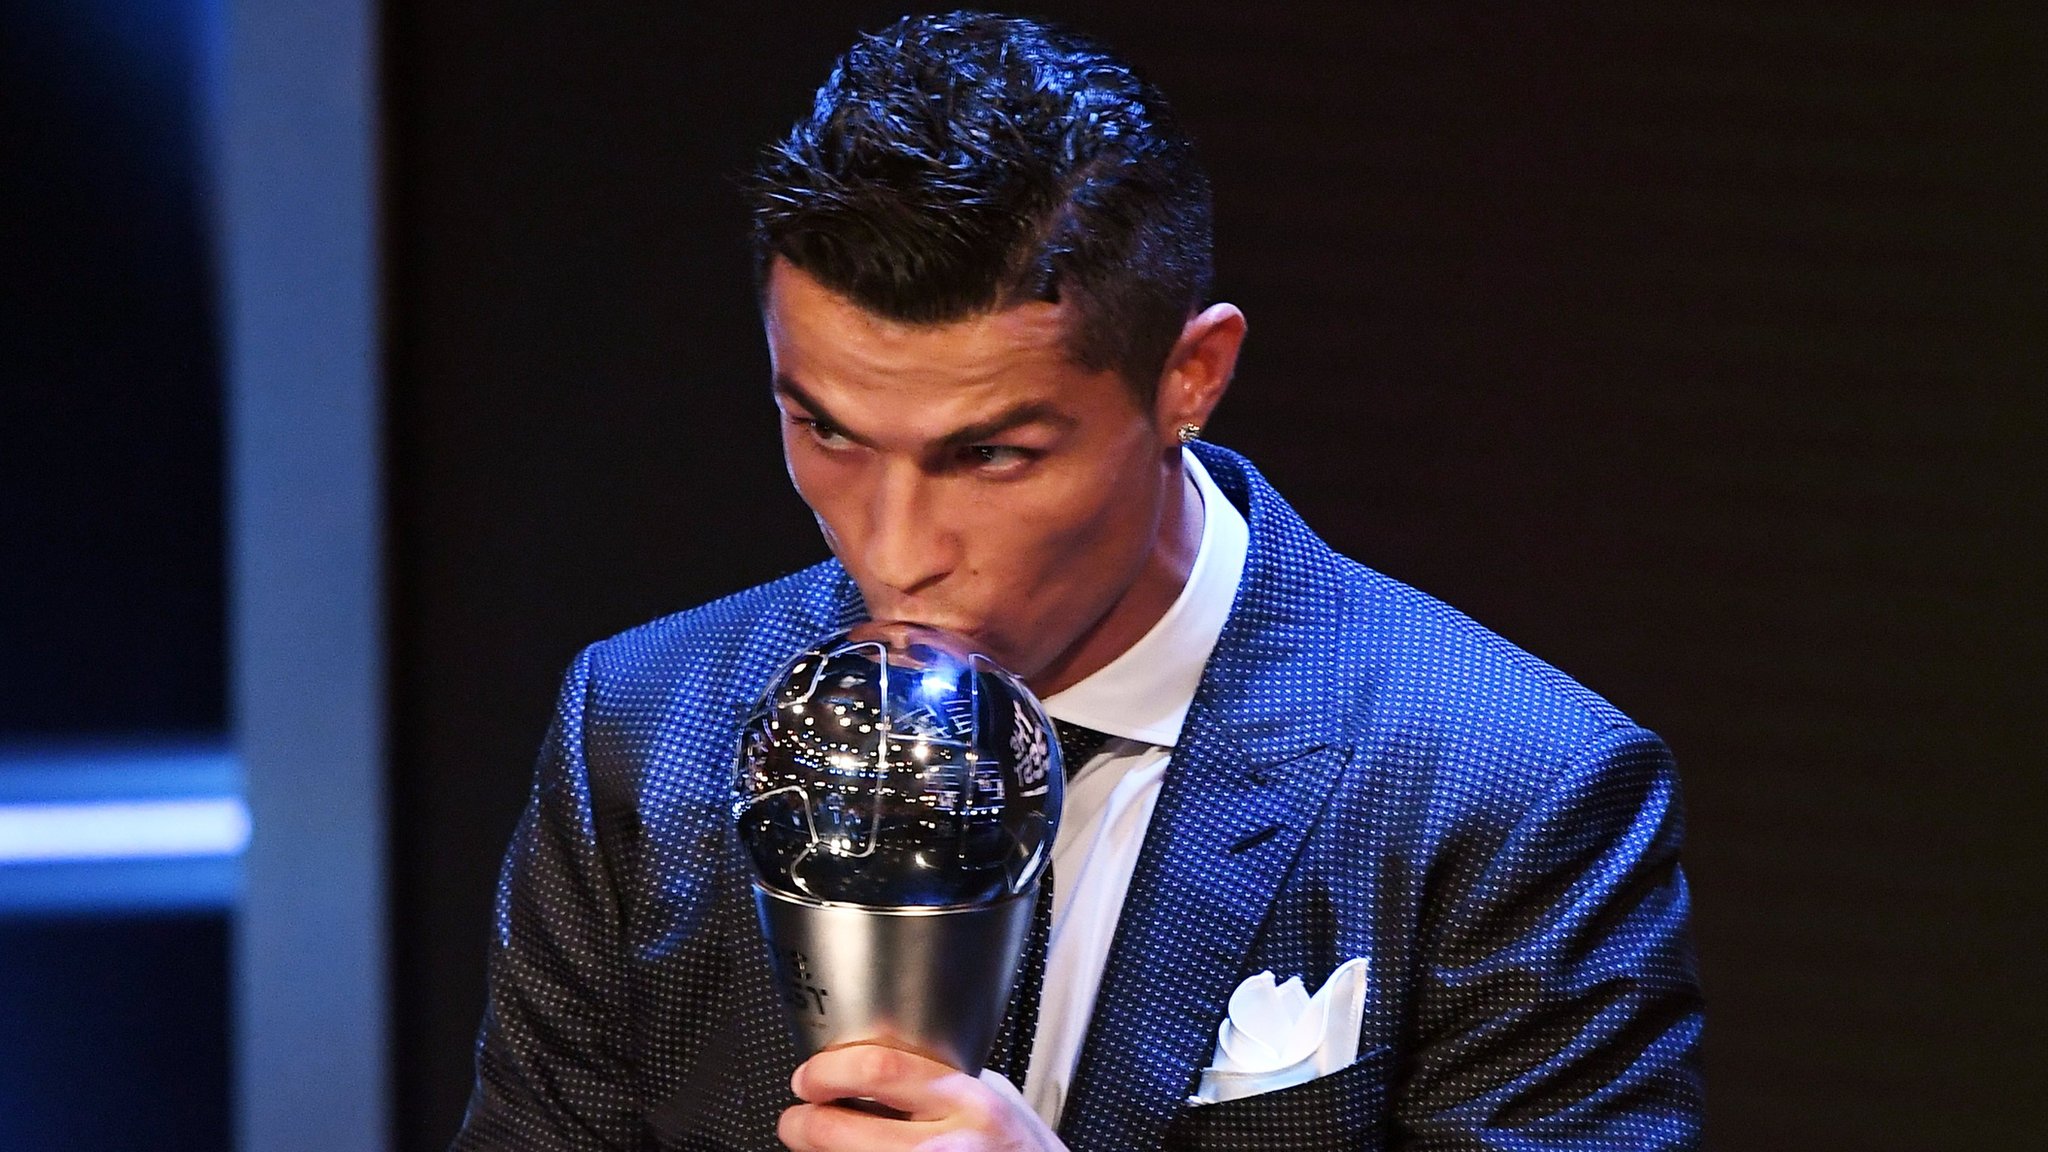 Cristiano Ronaldo beats Lionel Messi to win men's Fifa best player award